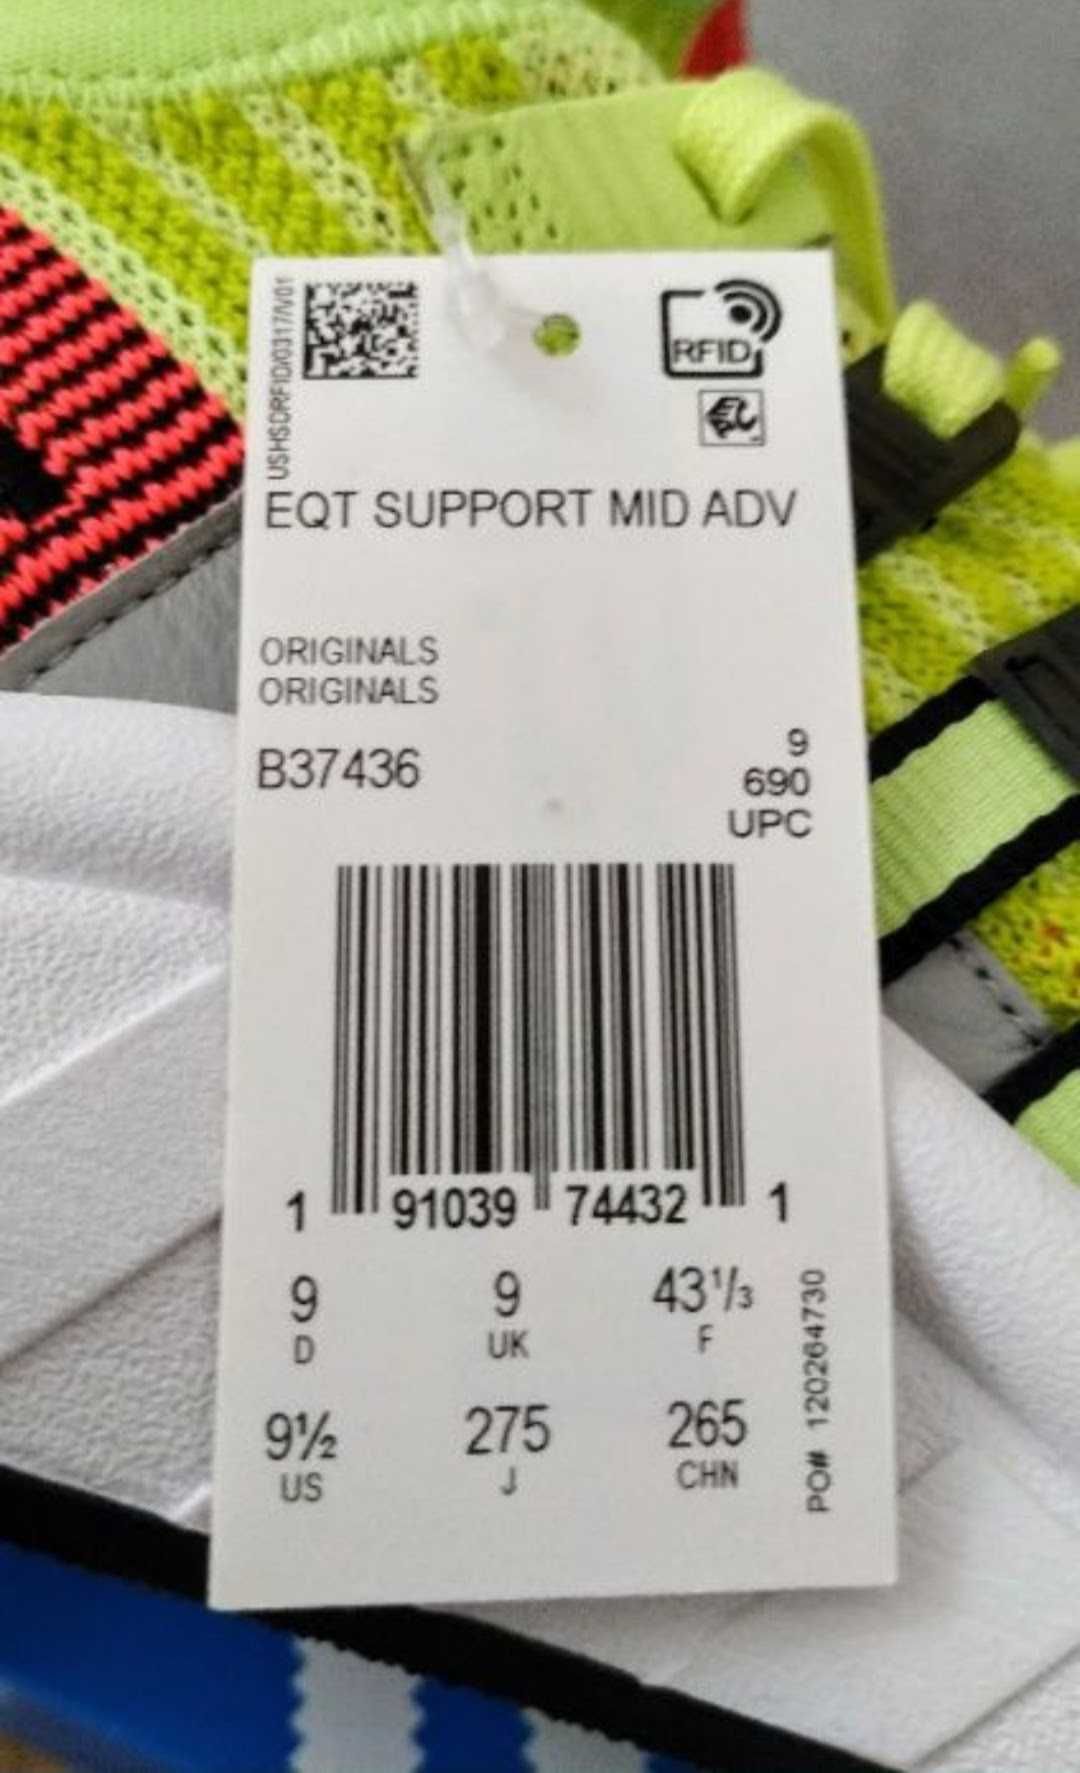 ДЕШЕВО! Кроссовки Adidas EQT Support Mid Adv Primeknit B37436 ОРИГИНАЛ